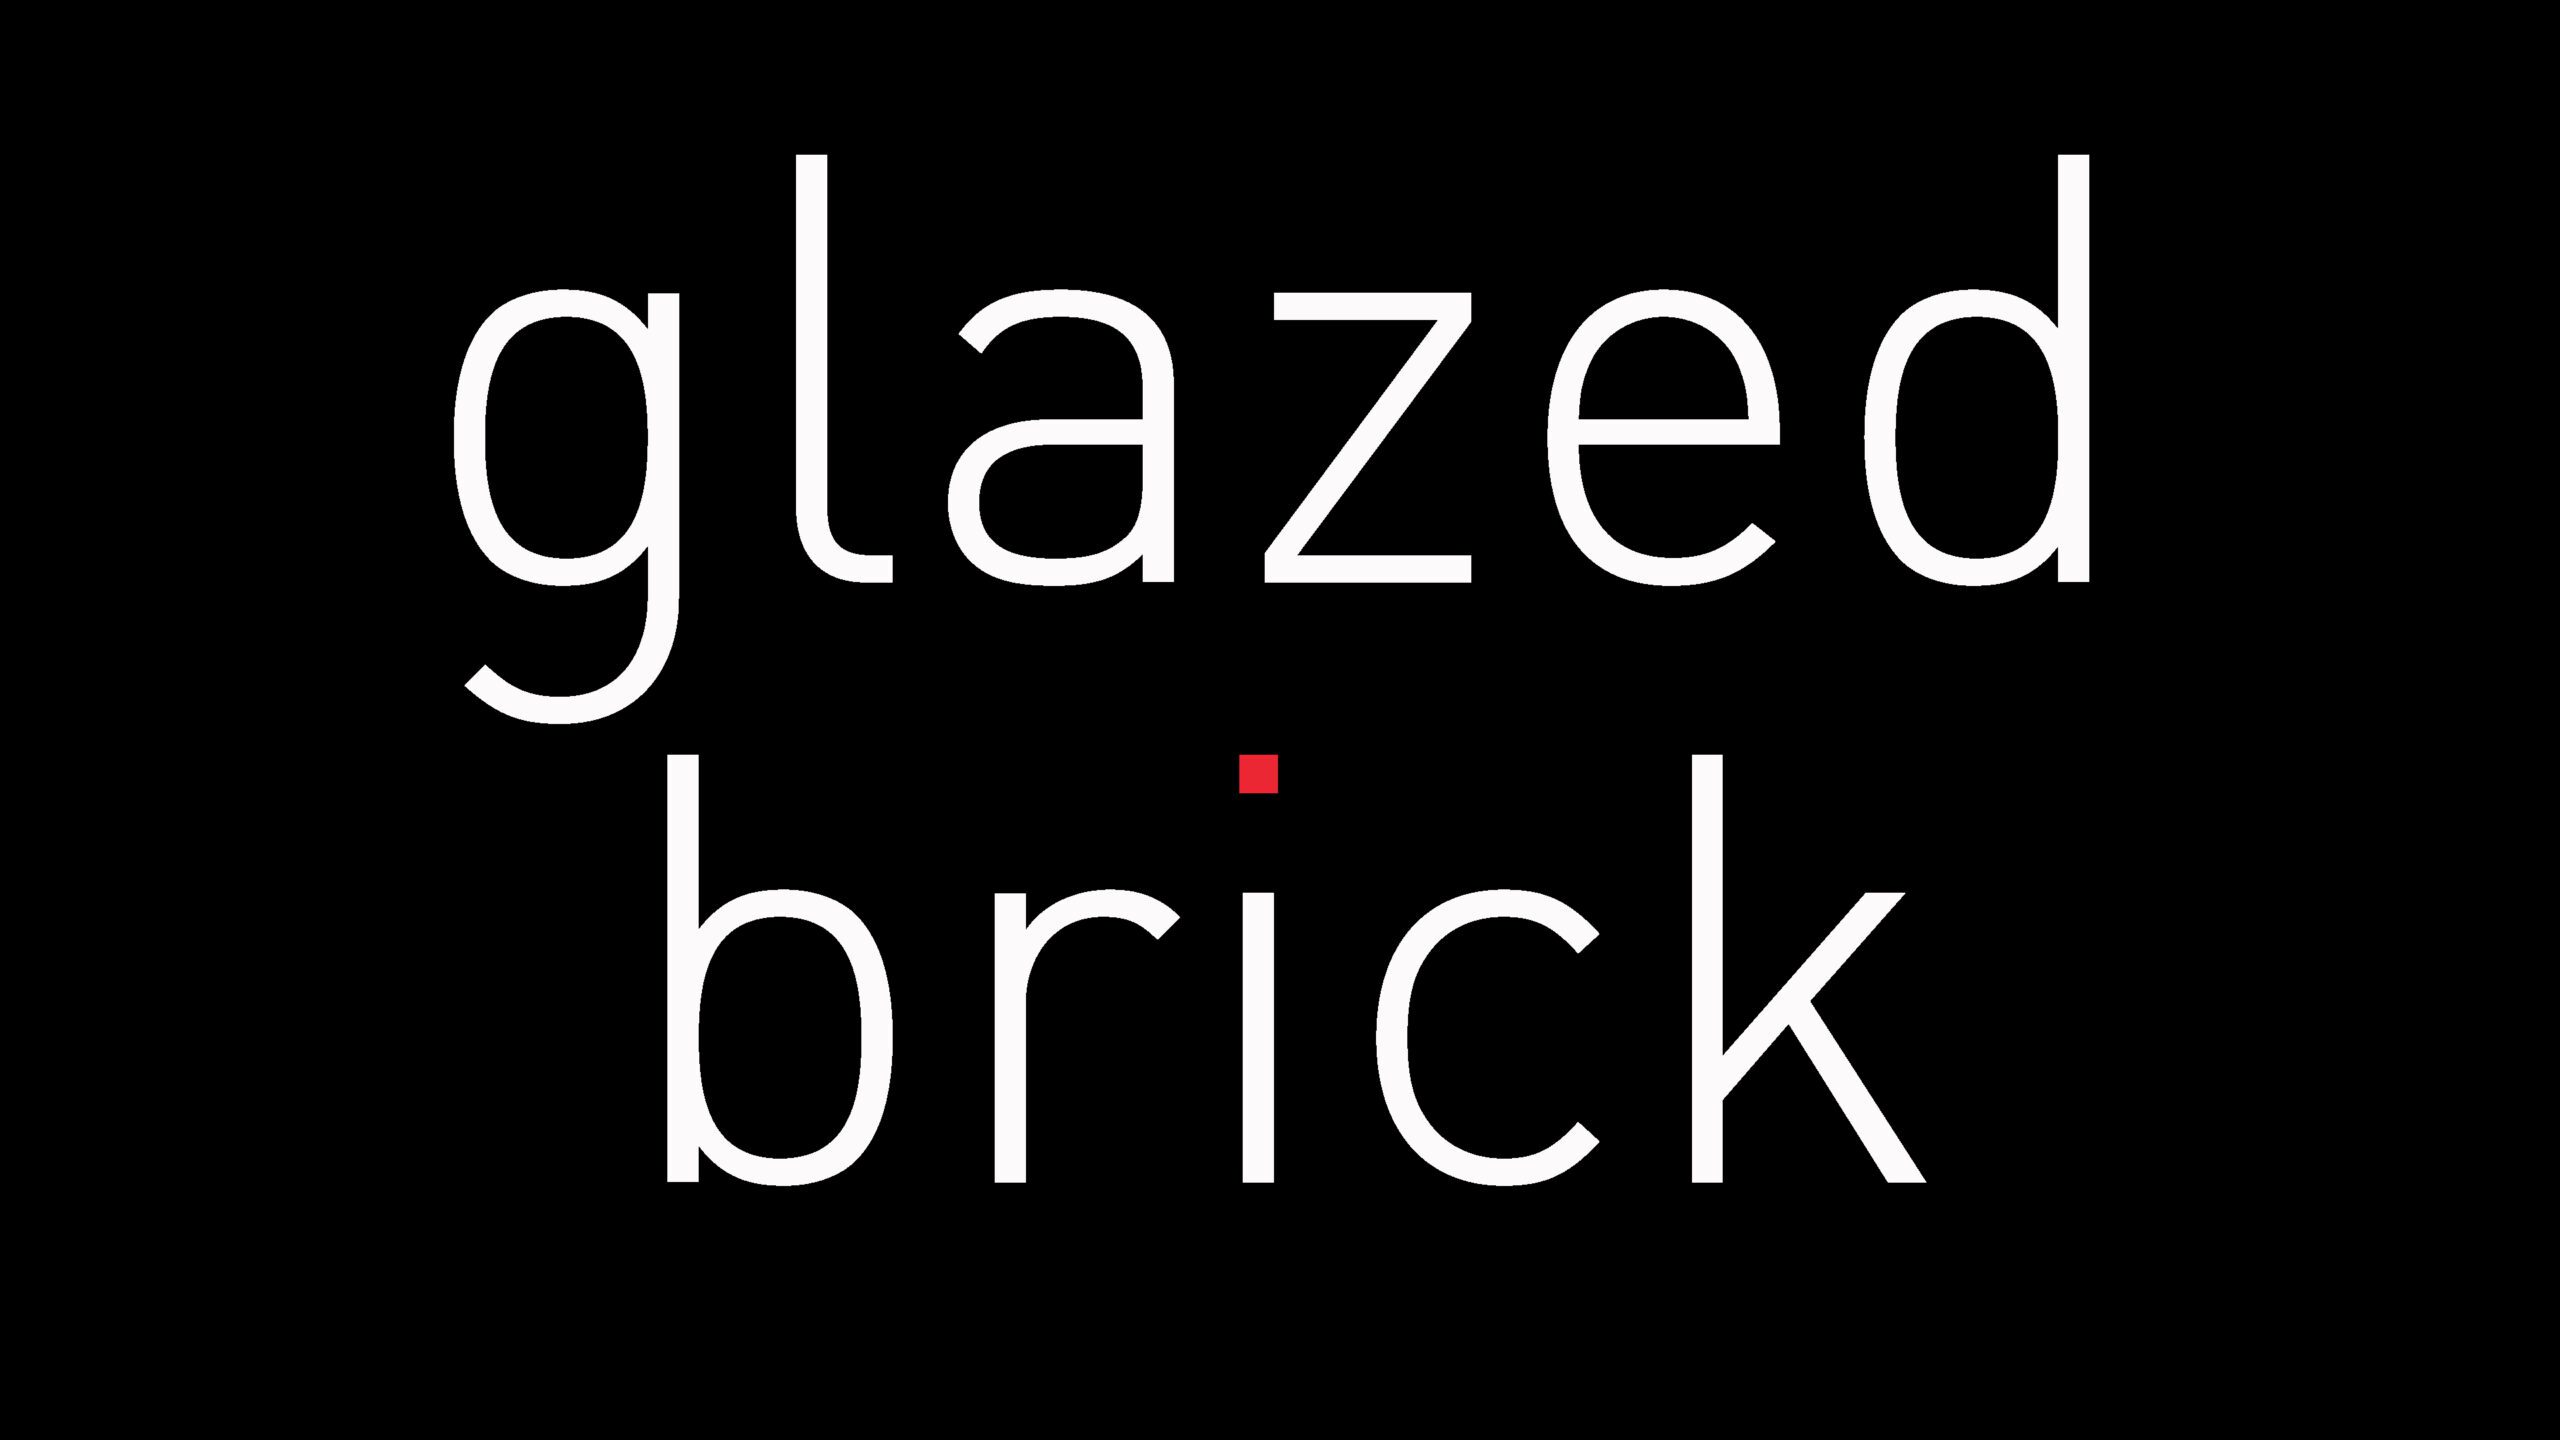 Glazed Brick